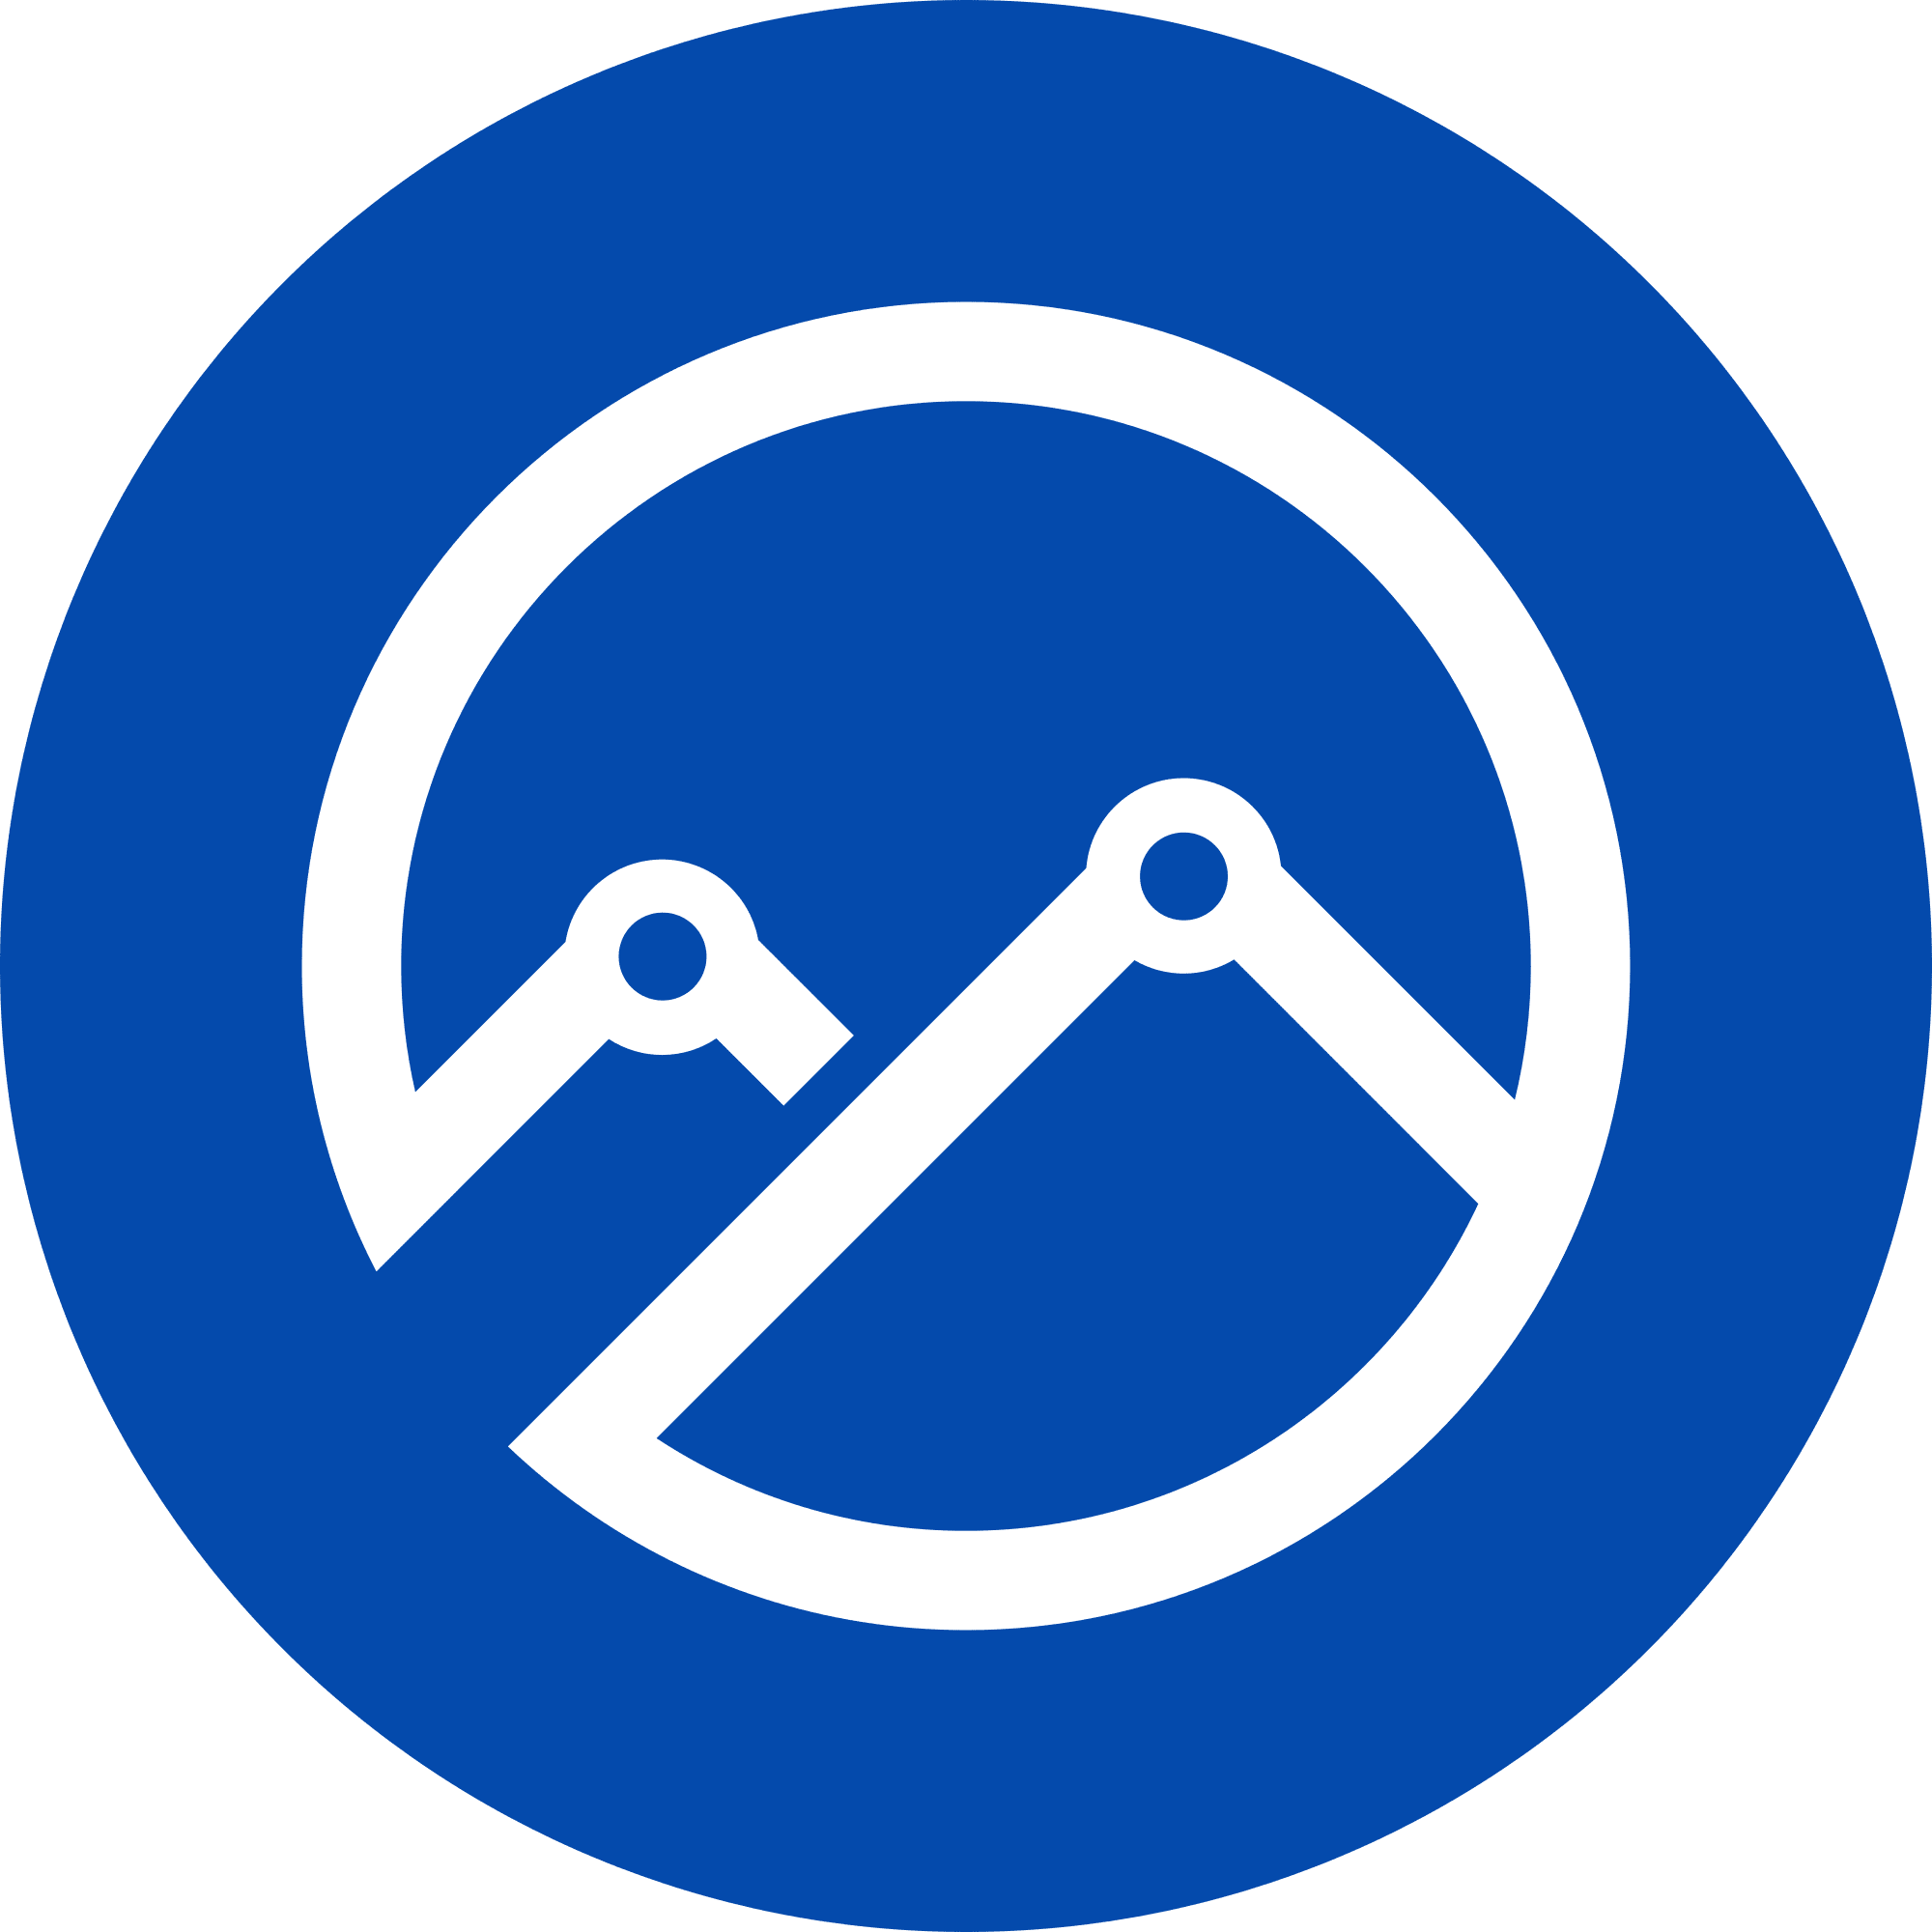 Everex logo in png format